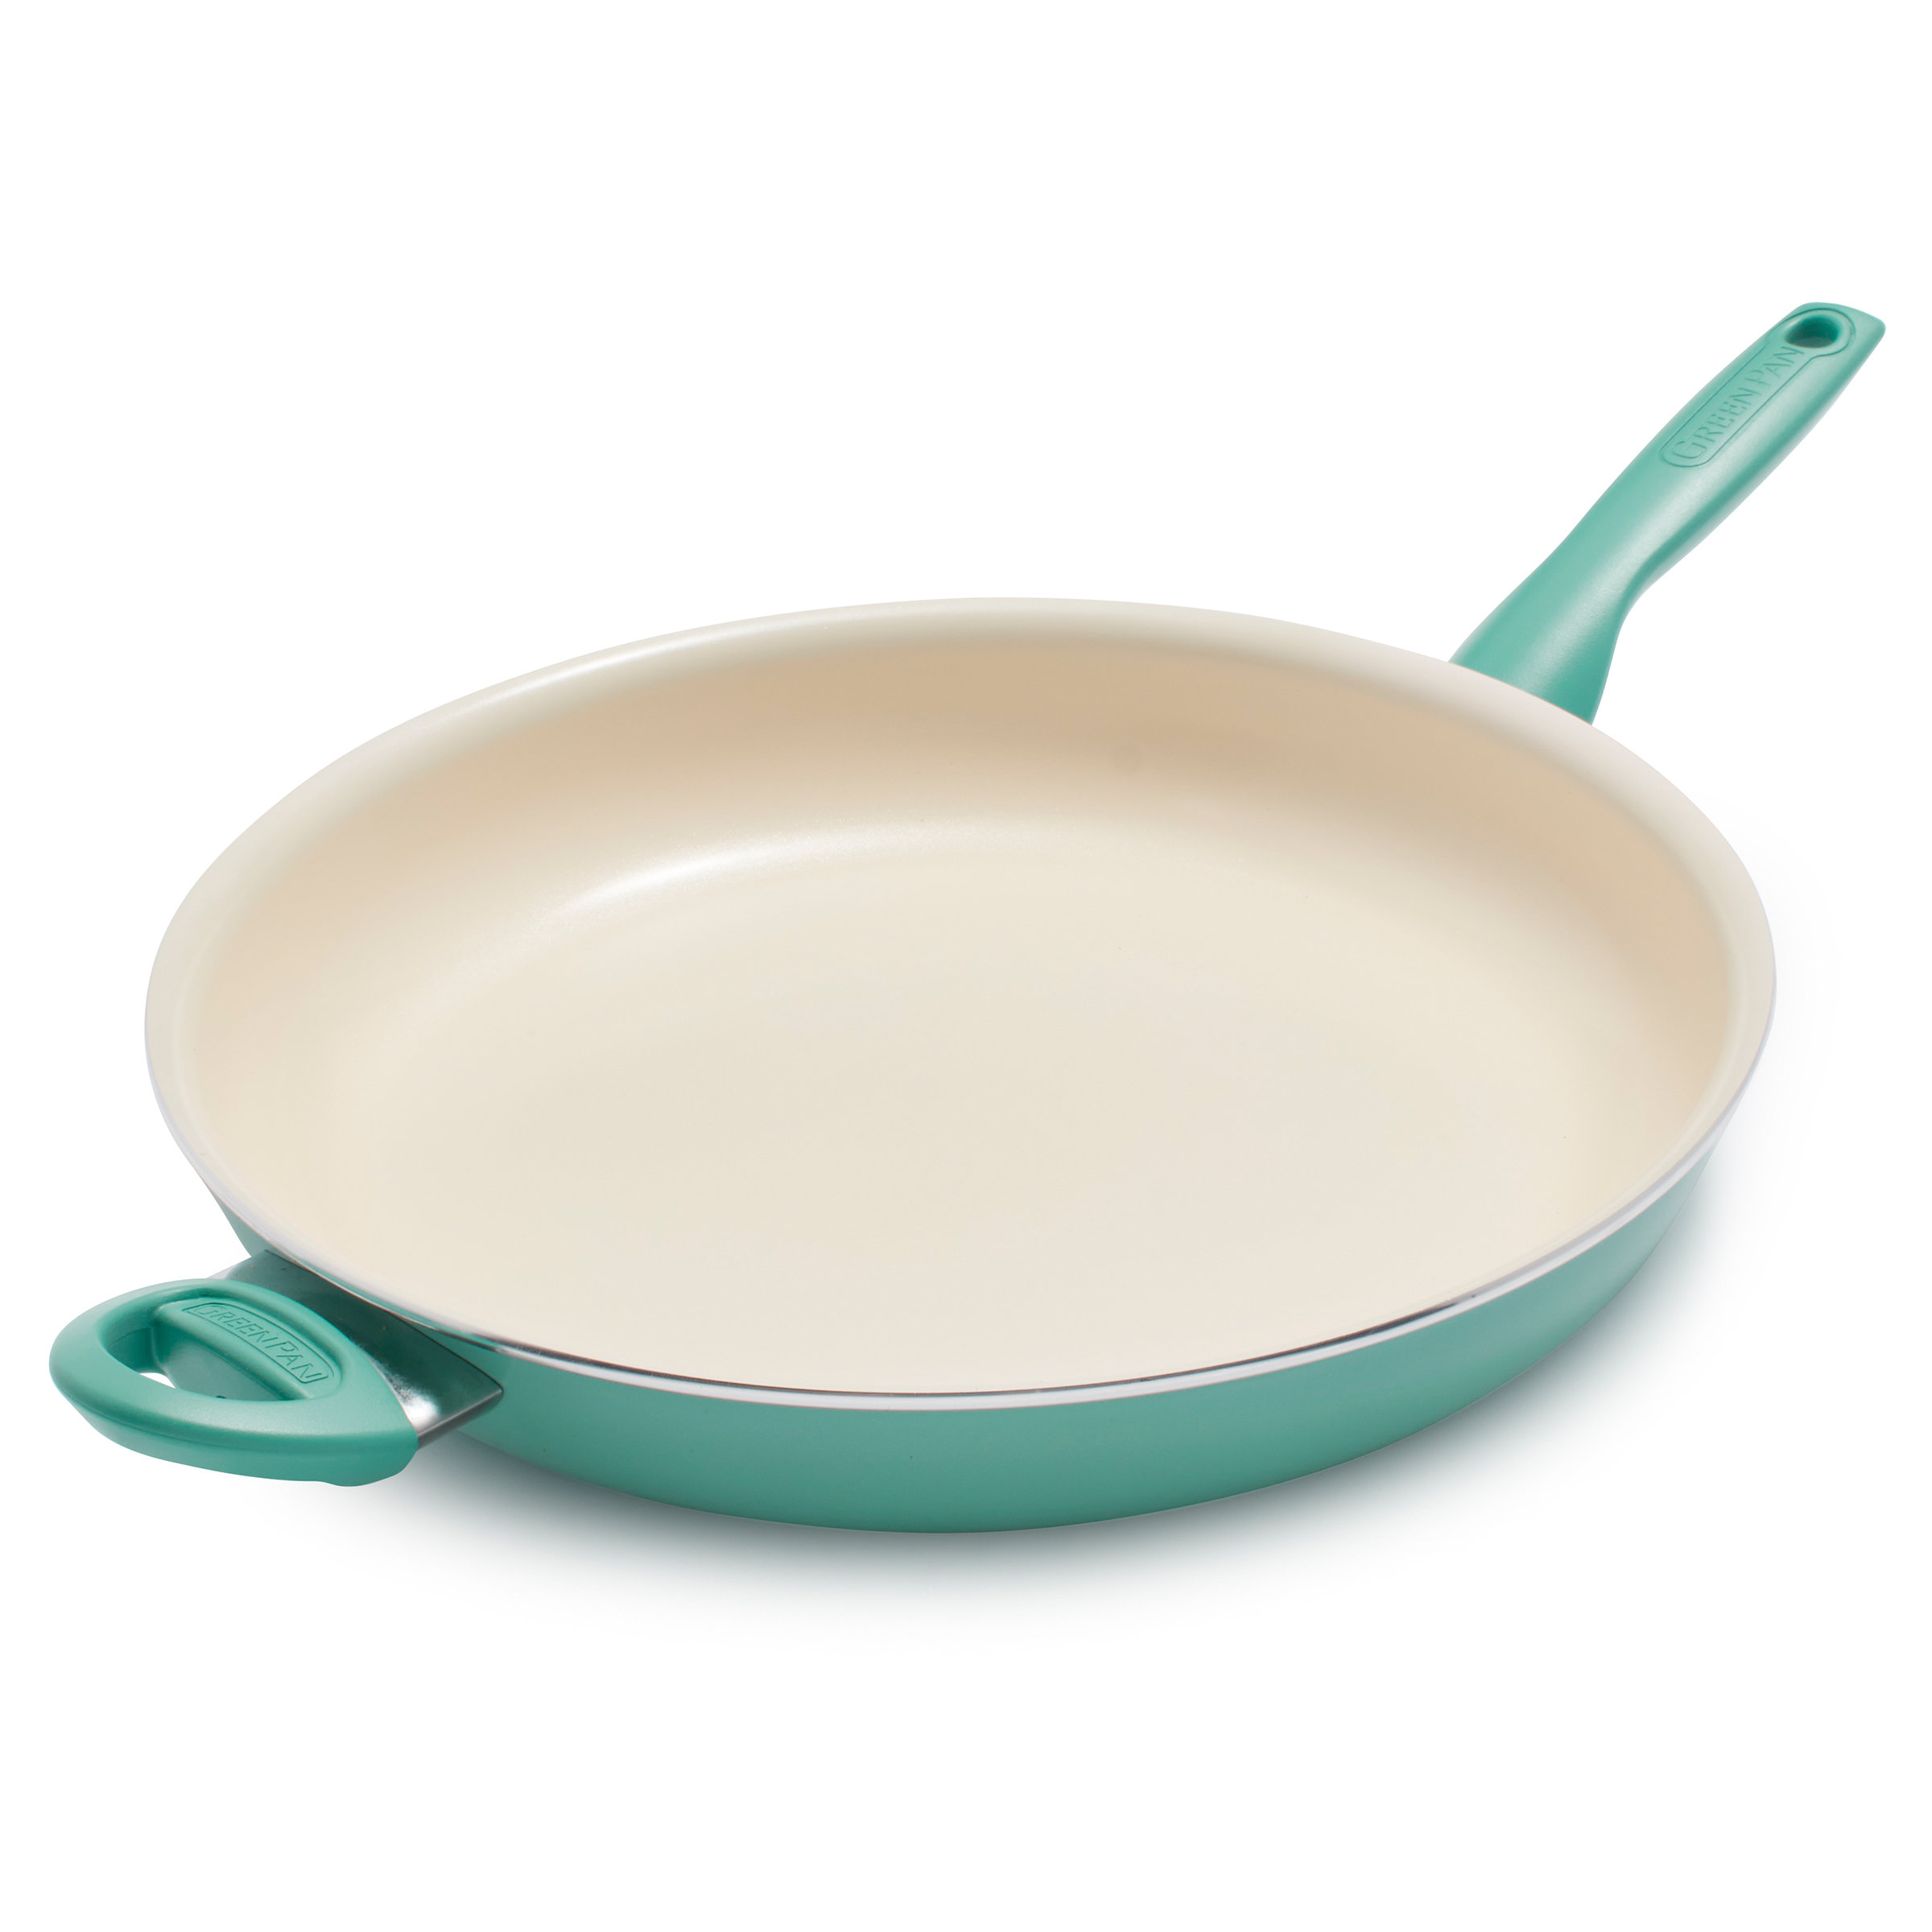 GreenPan Rio Ceramic Nonstick 16-Piece Cookware Set ,Turquoise